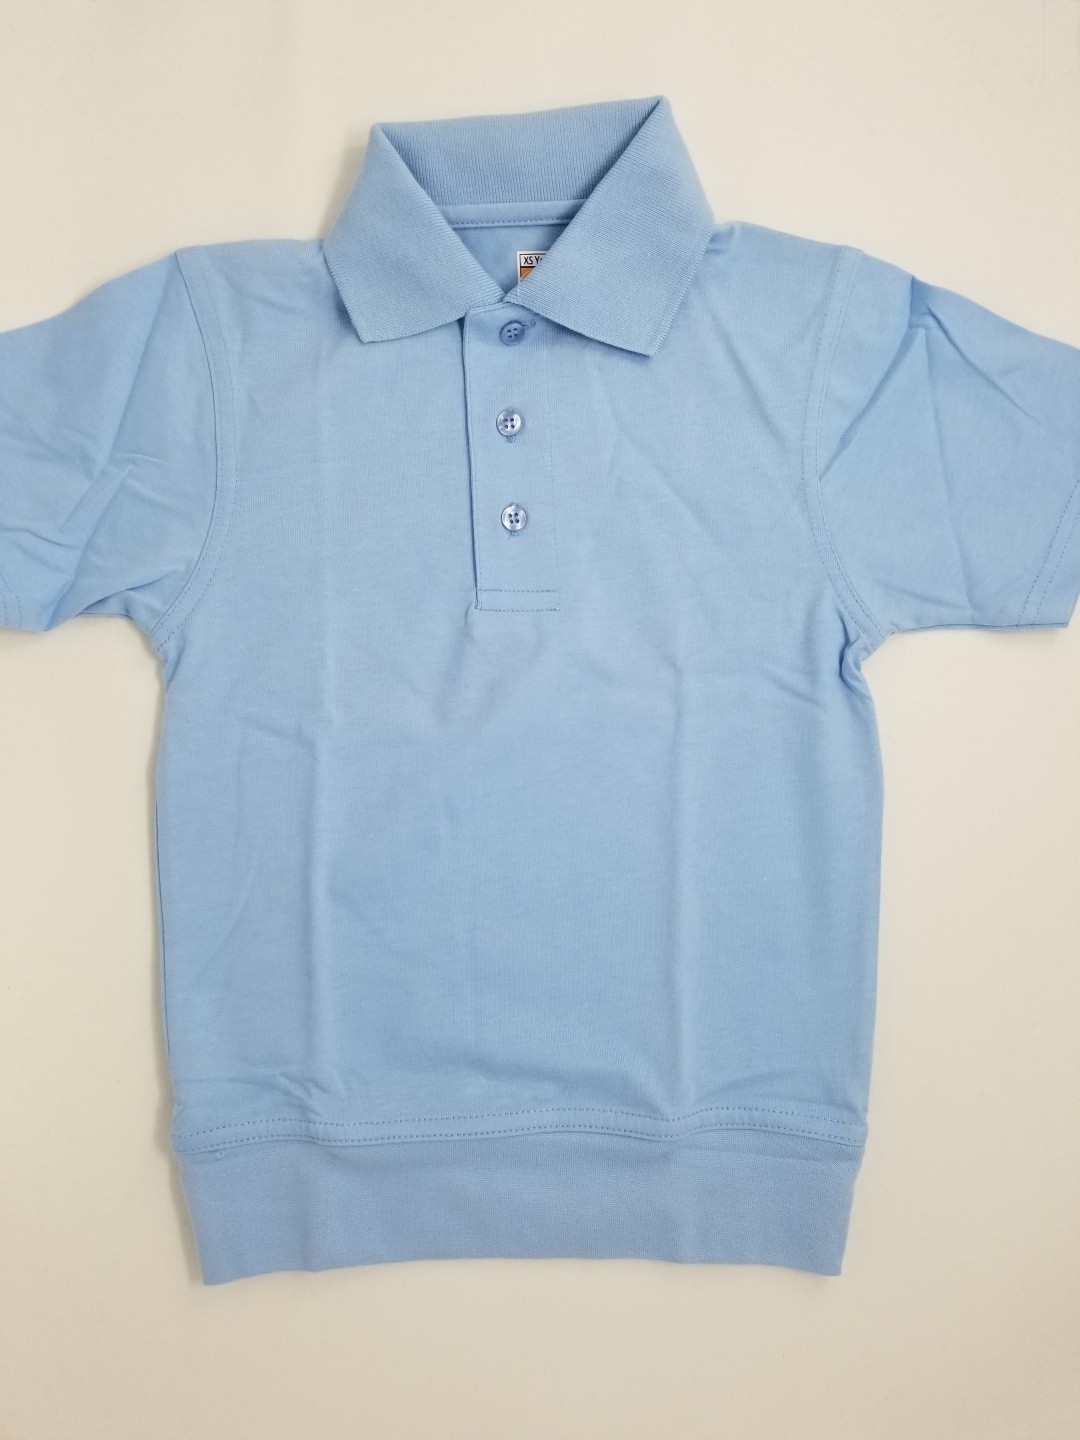 Banded Bottom "No Tuck" Knit Shirt- Smooth/Jersey- Short Sleeve-Light Blue